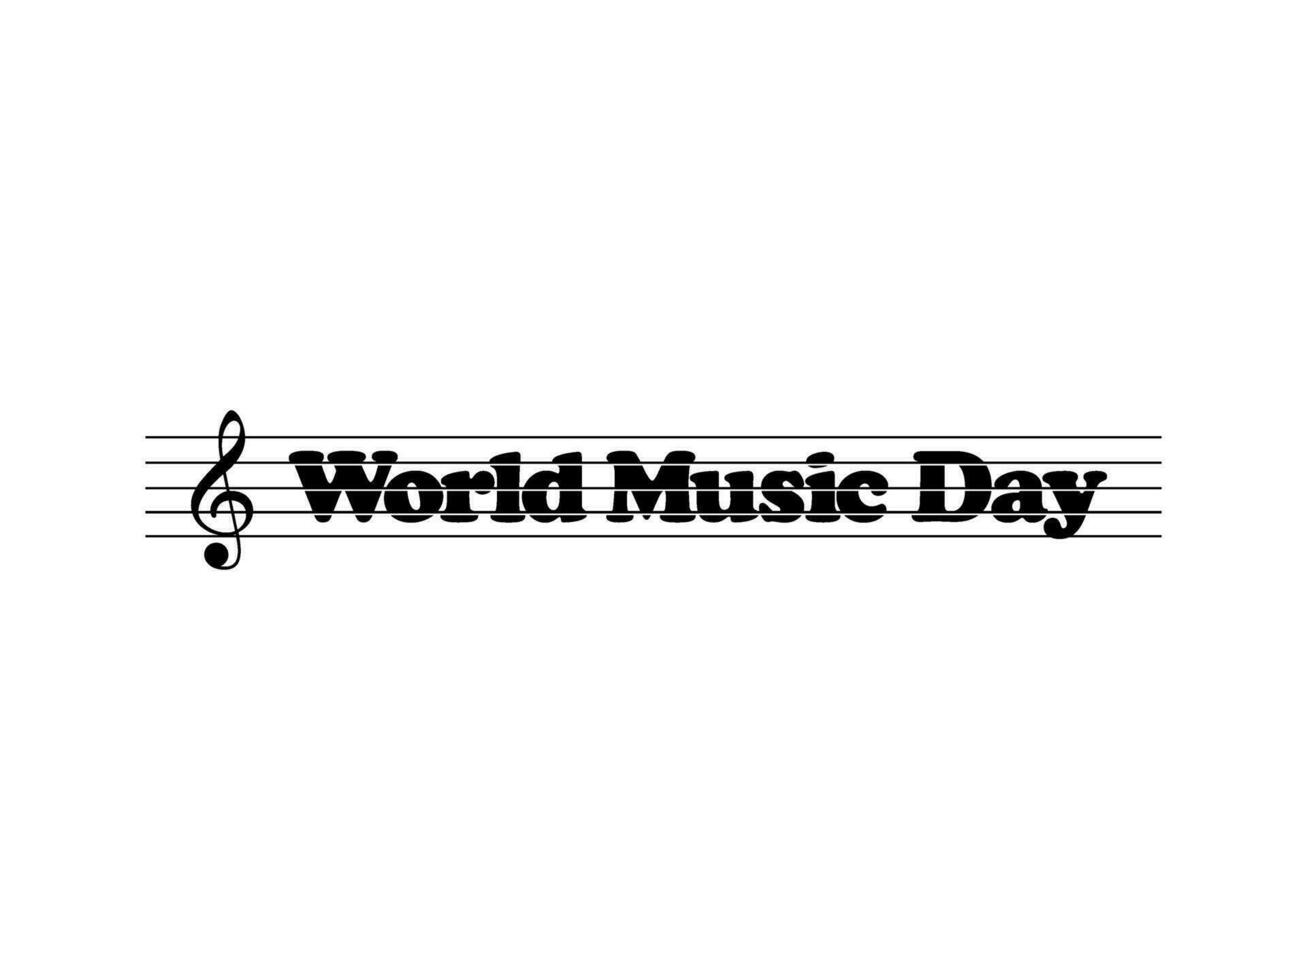 WORLD MUSIC DAY Text Illustration, for Logo Type, Website, Art Illustration, Poster, Banner or Graphic Design Element. Vector Illustration